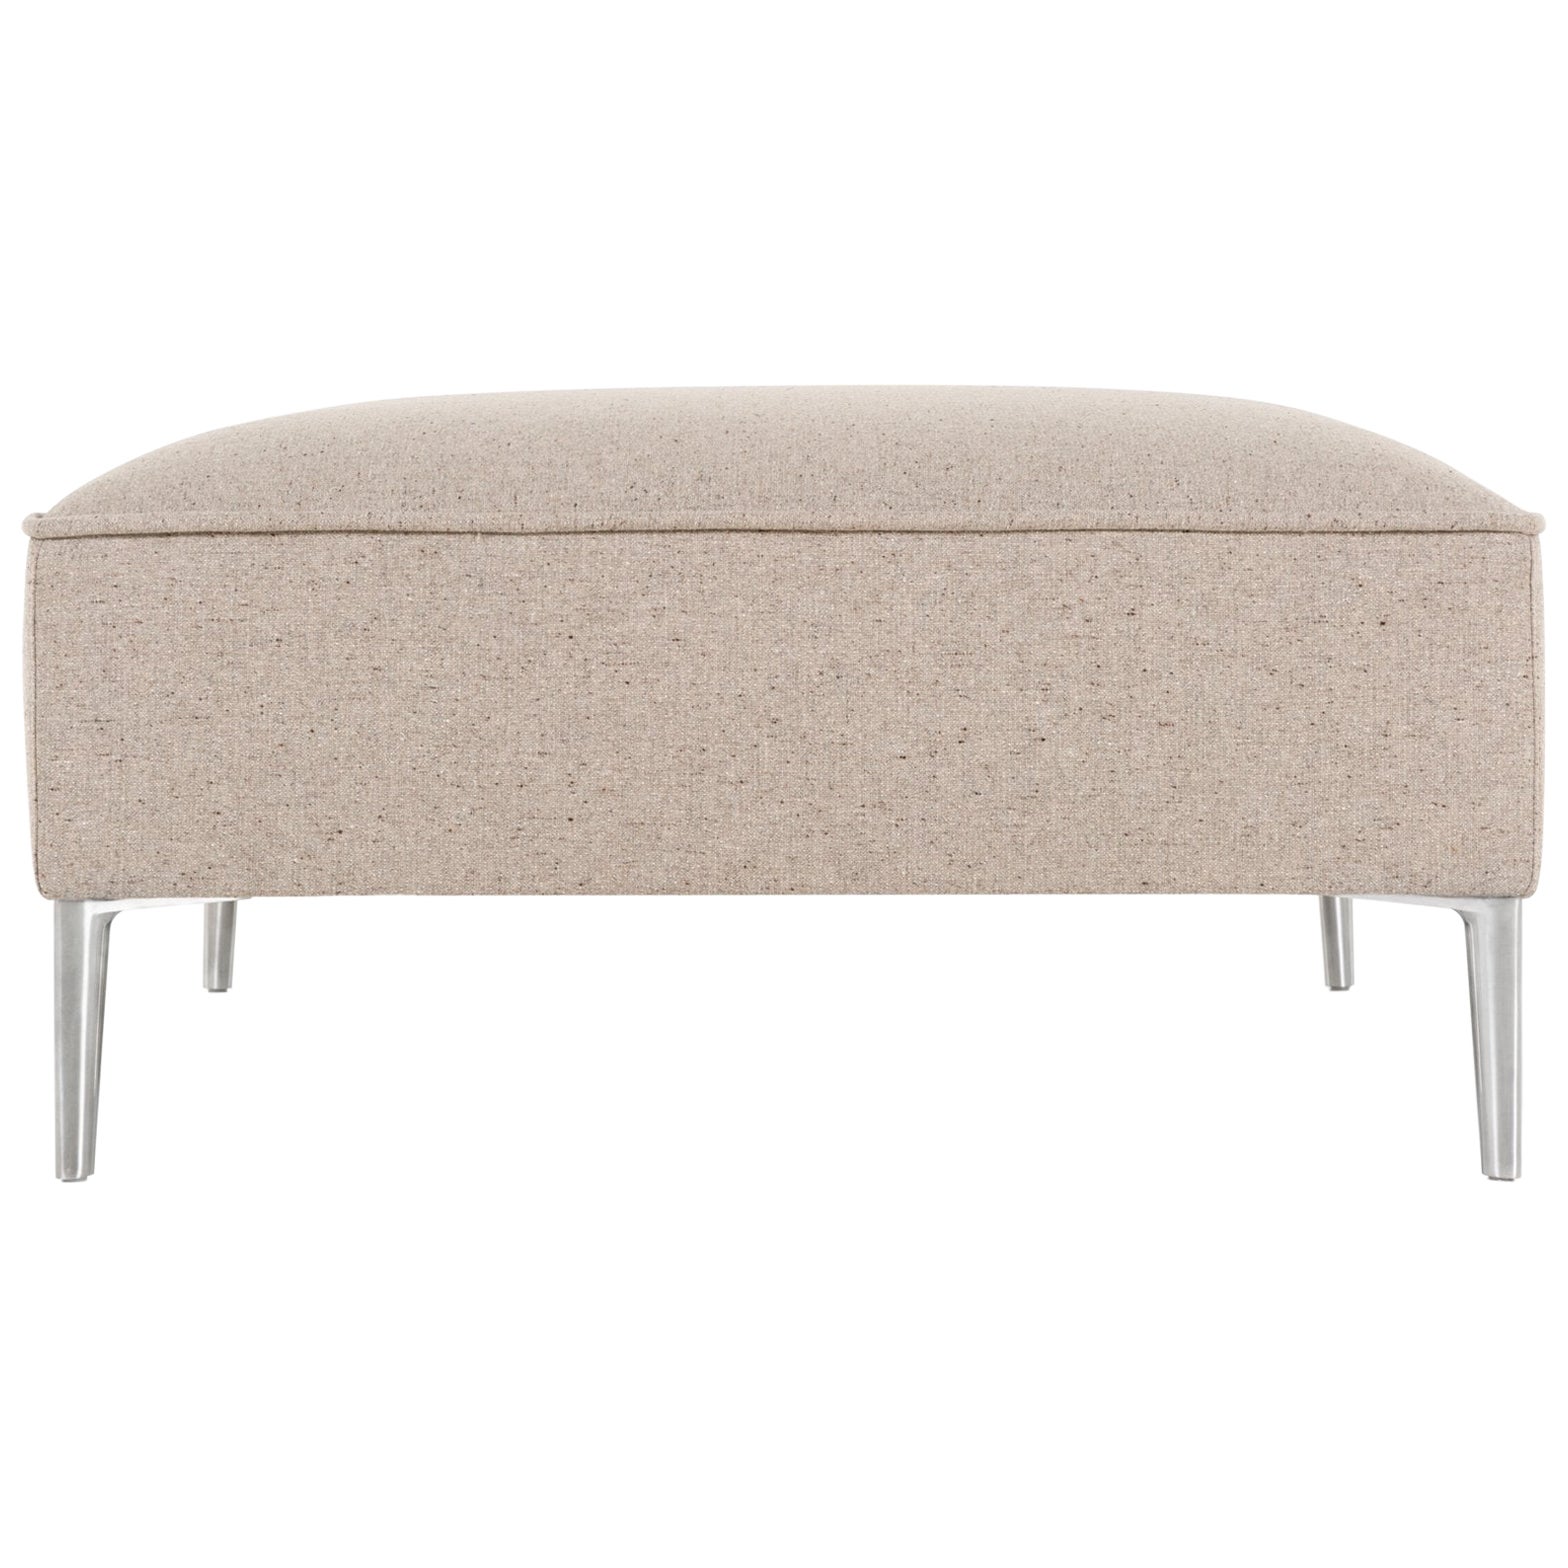 Moooi Sofa So Good Footstool in Solis Paper Upholstery & Polished Aluminum Feet